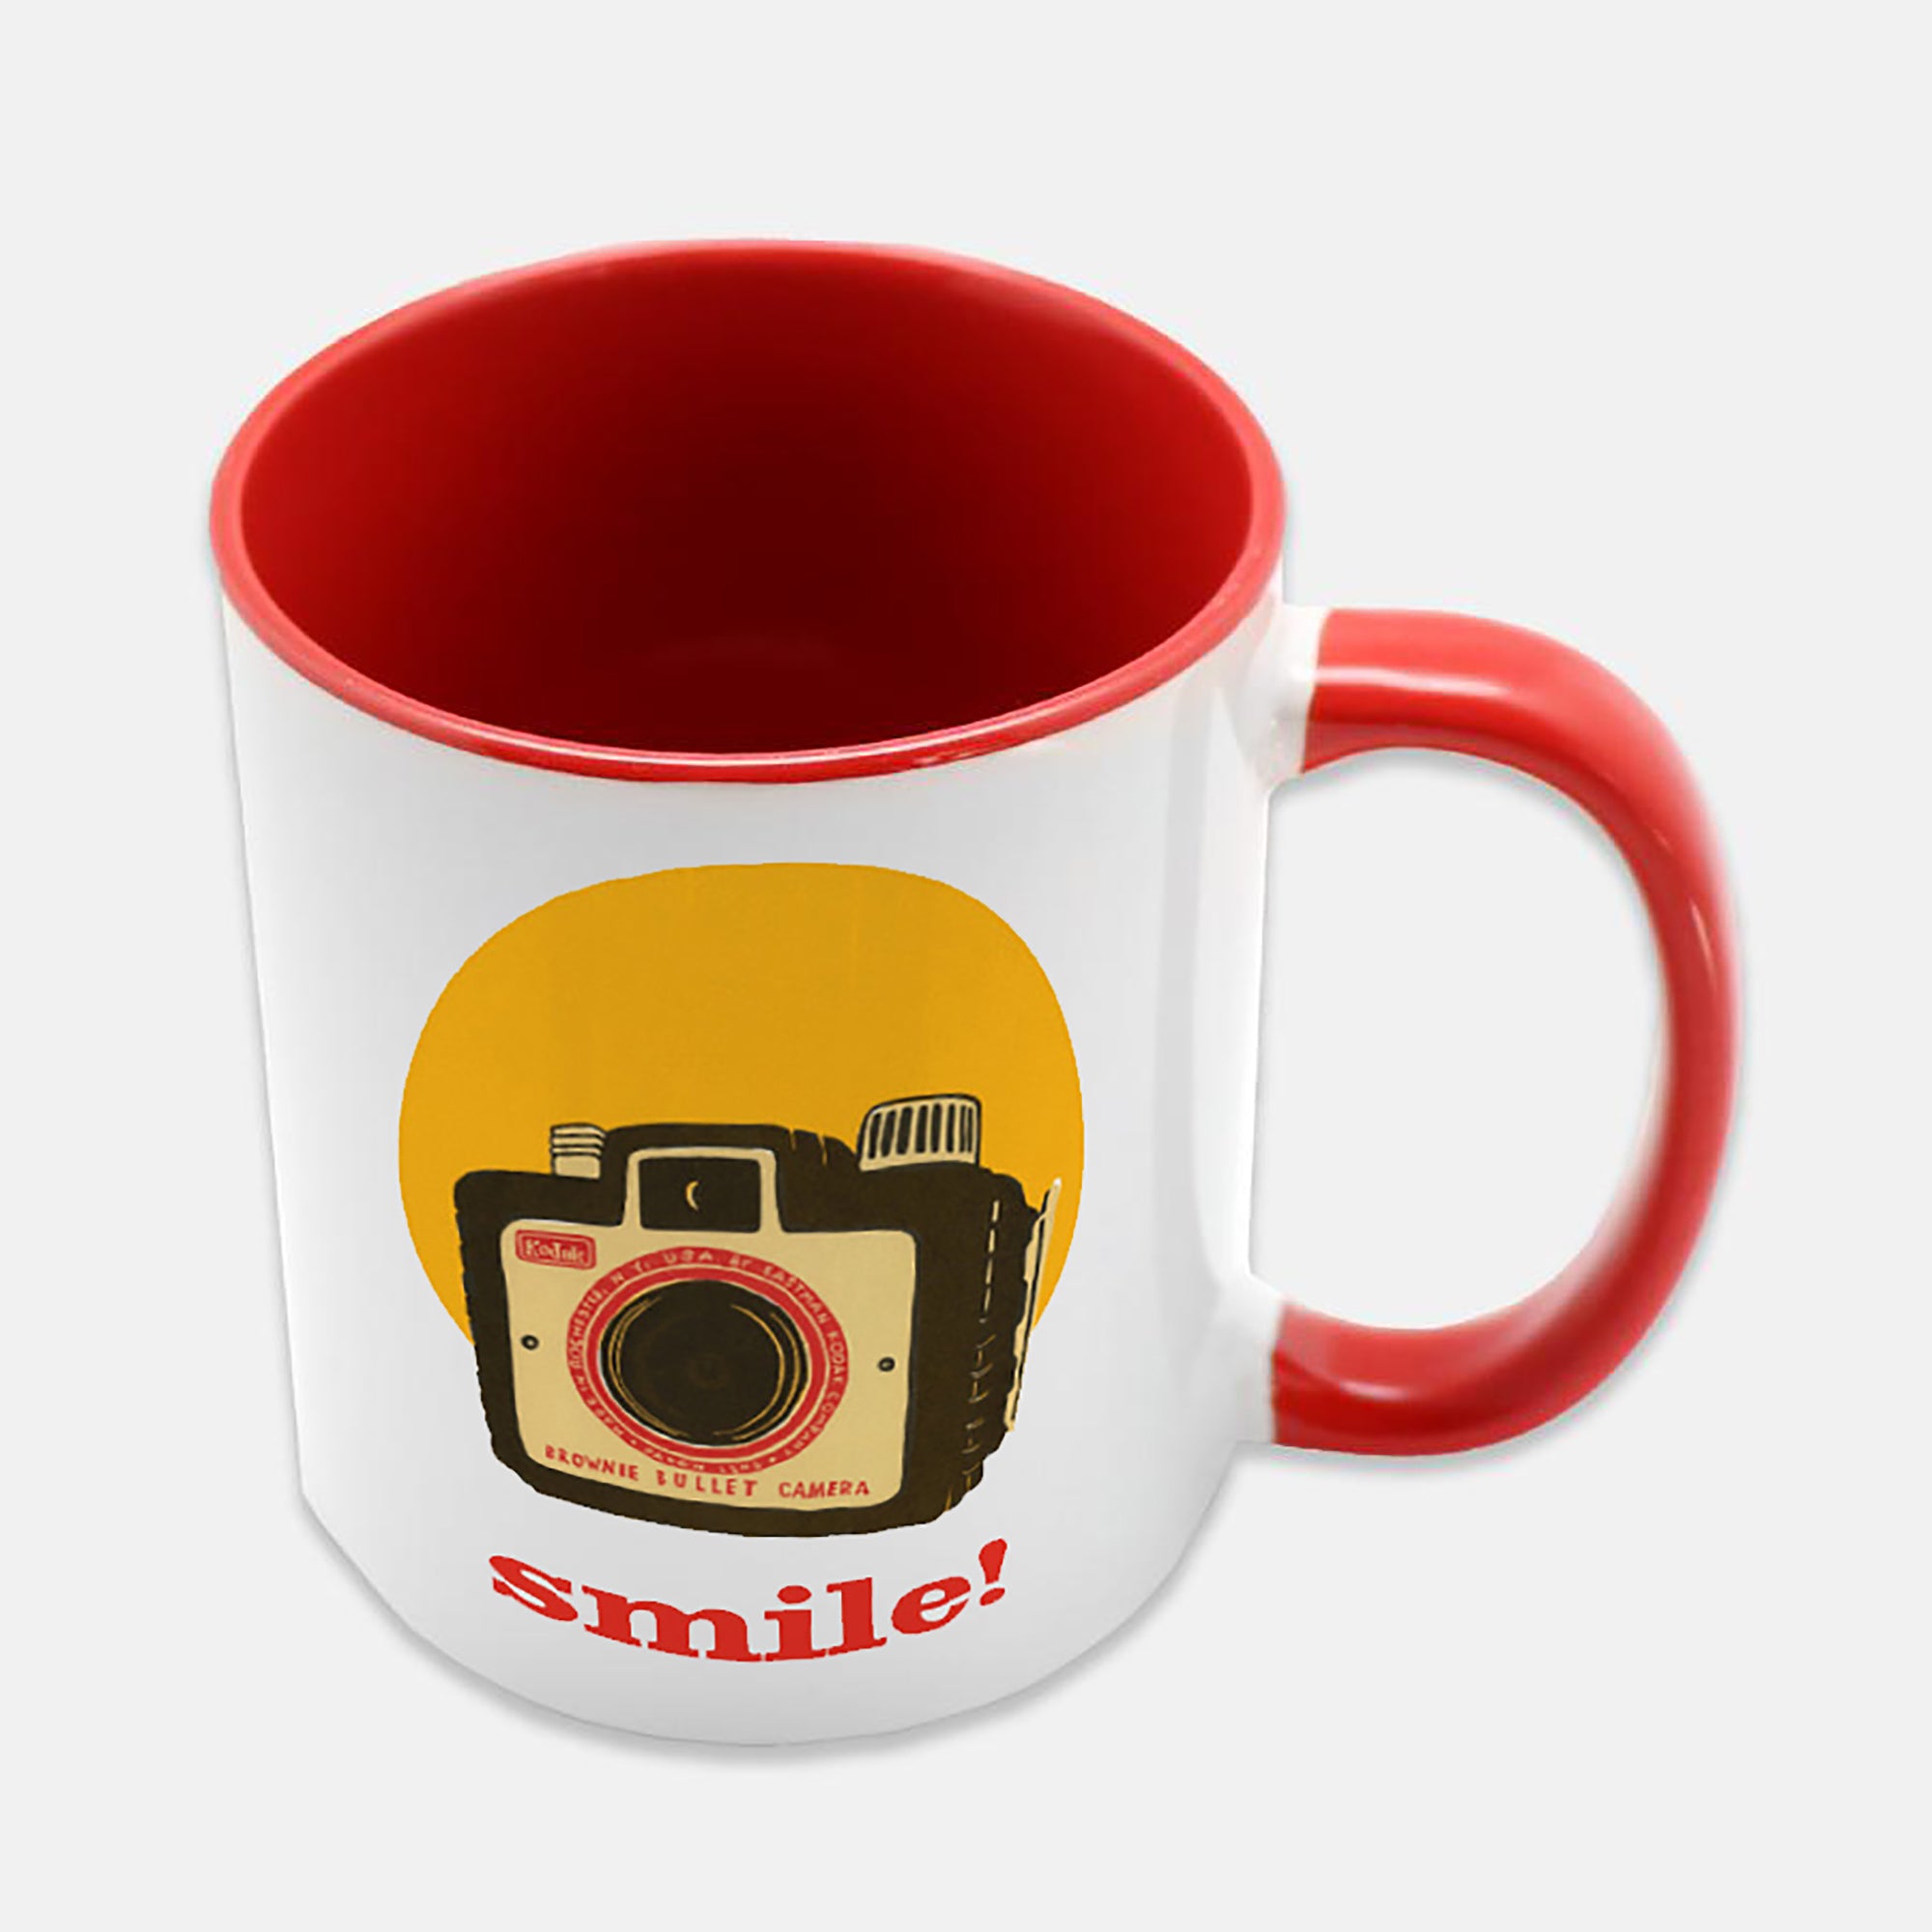 Smile! Ceramic Coffee Mug, 11oz